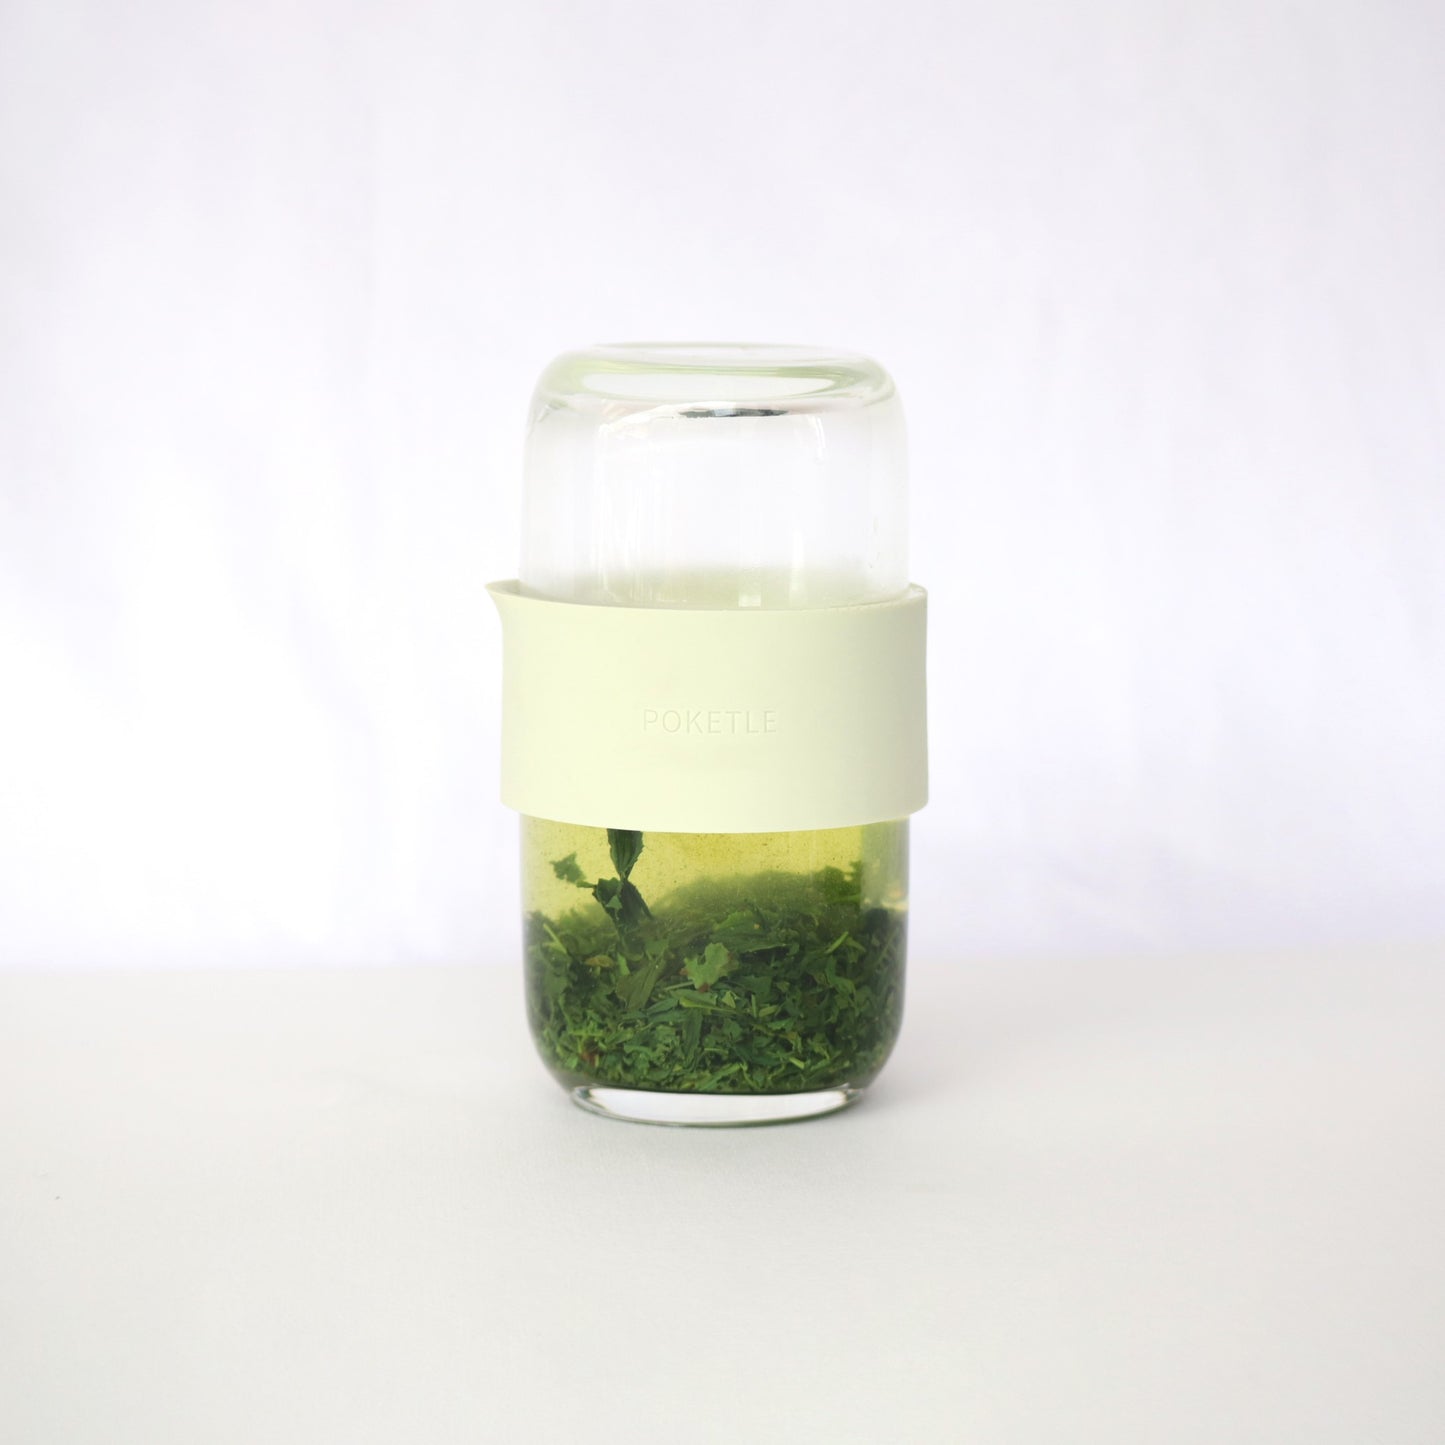 POCKETLE Glass Teacup - Vidro Calm 140ml